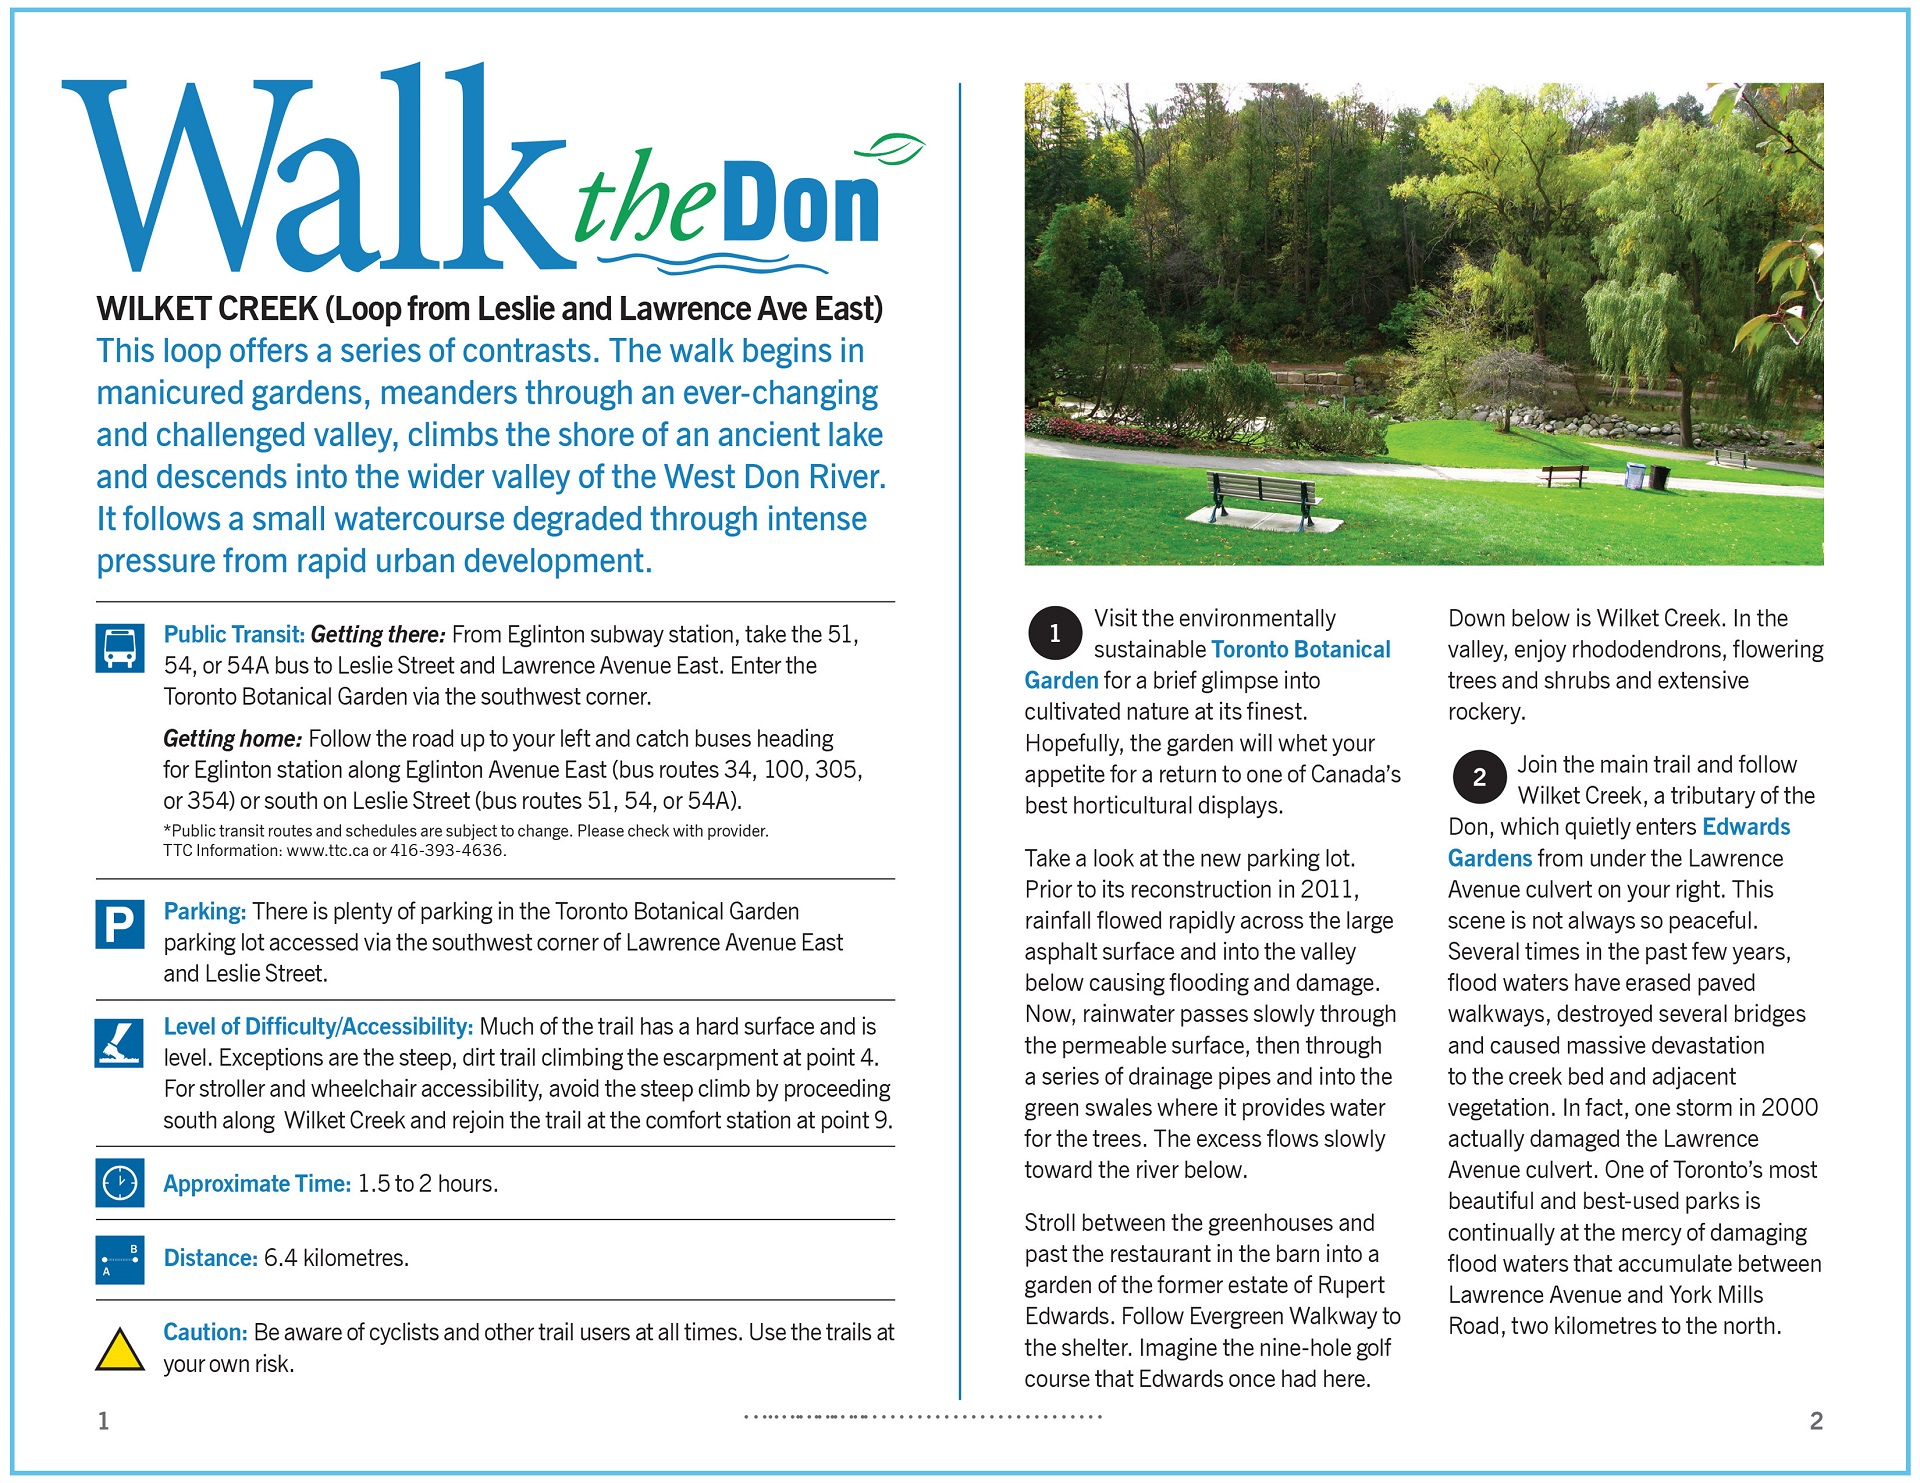 Walk the Don - Wilket Creek Trail Guide